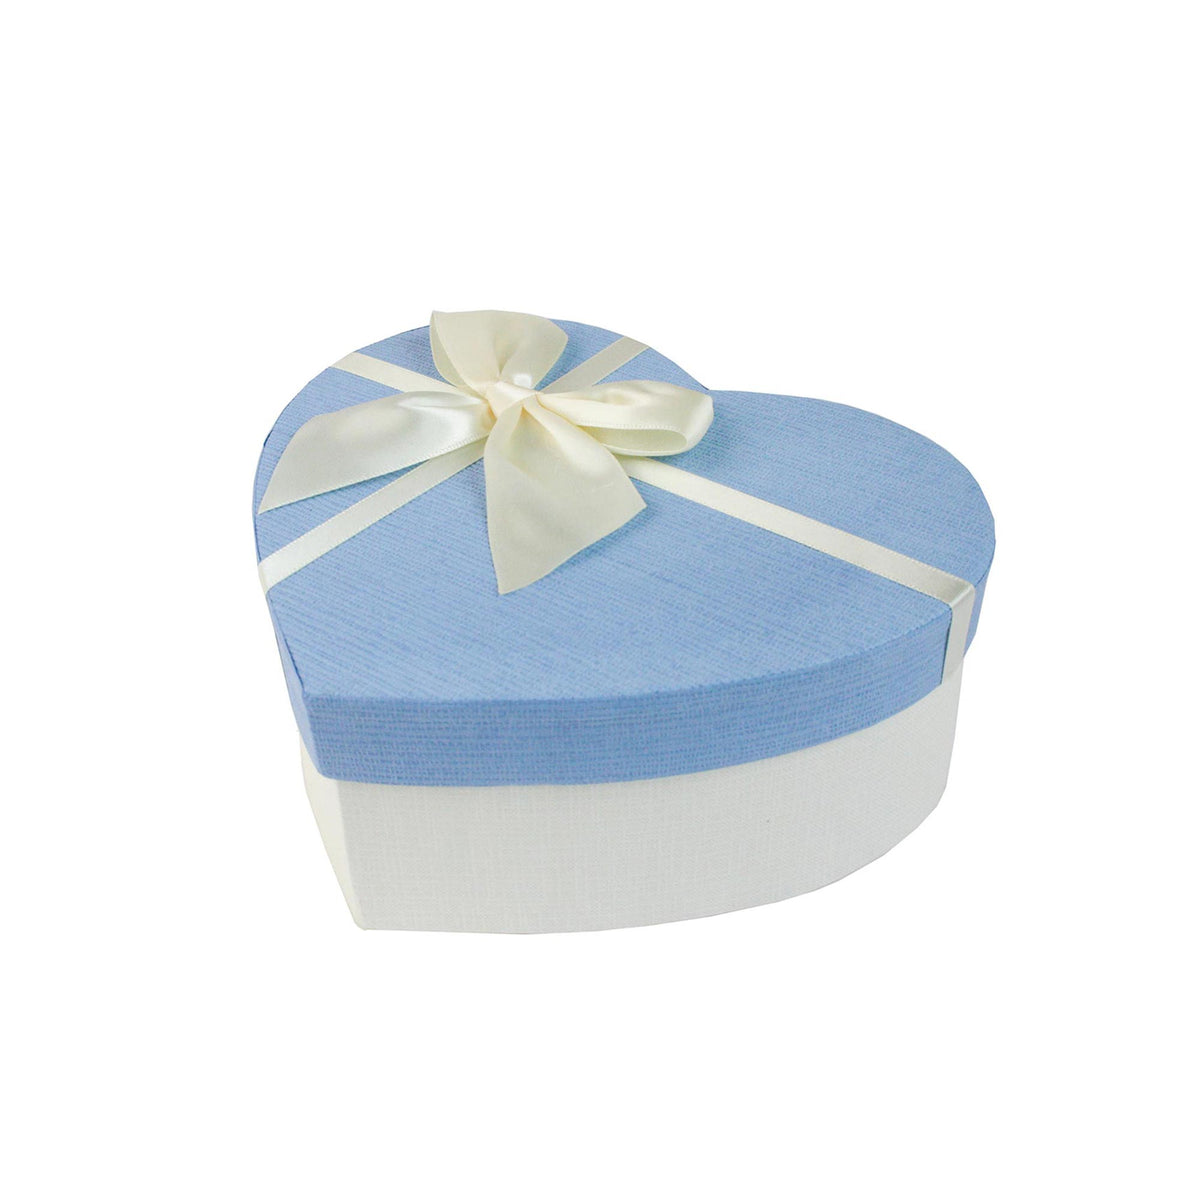 Luxury Heart Shaped White/Blue Gift Box - Single (Sizes Available)